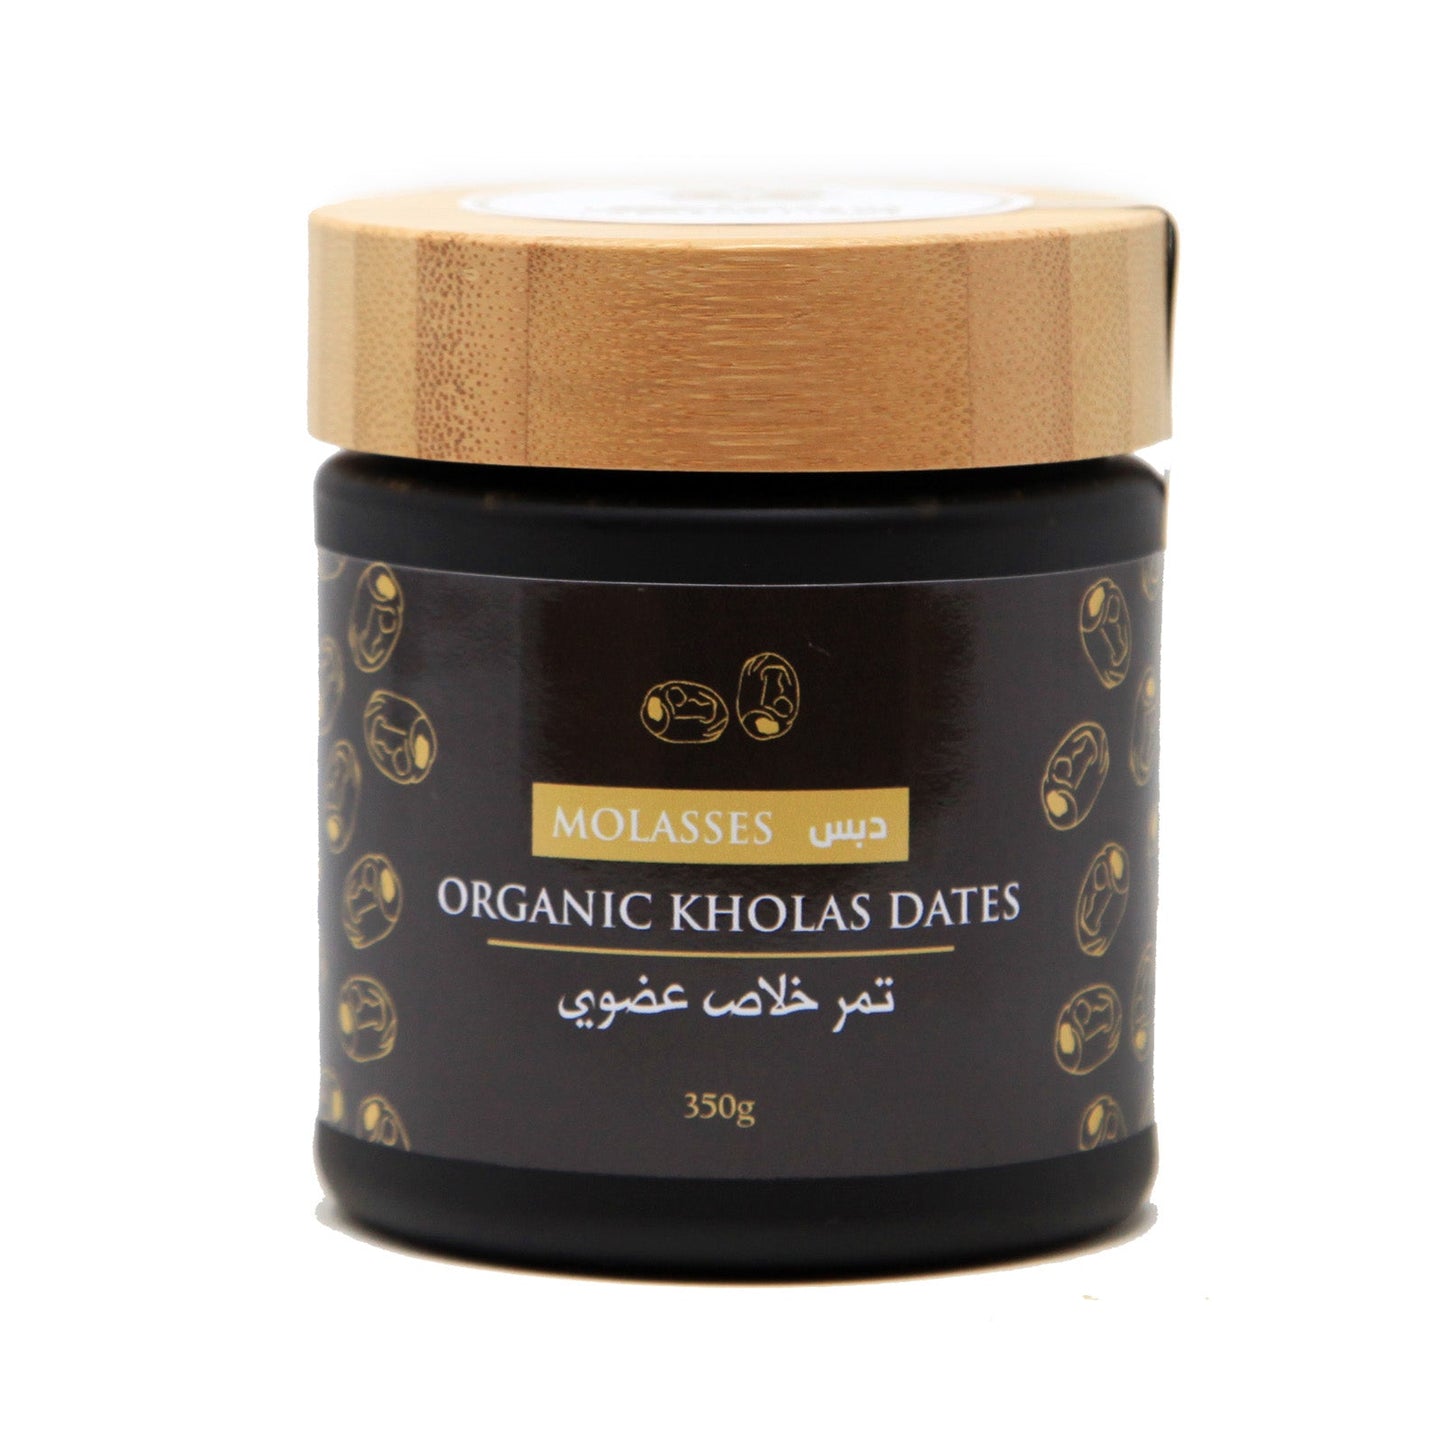 Organic Kholas Date Molasses - 380g